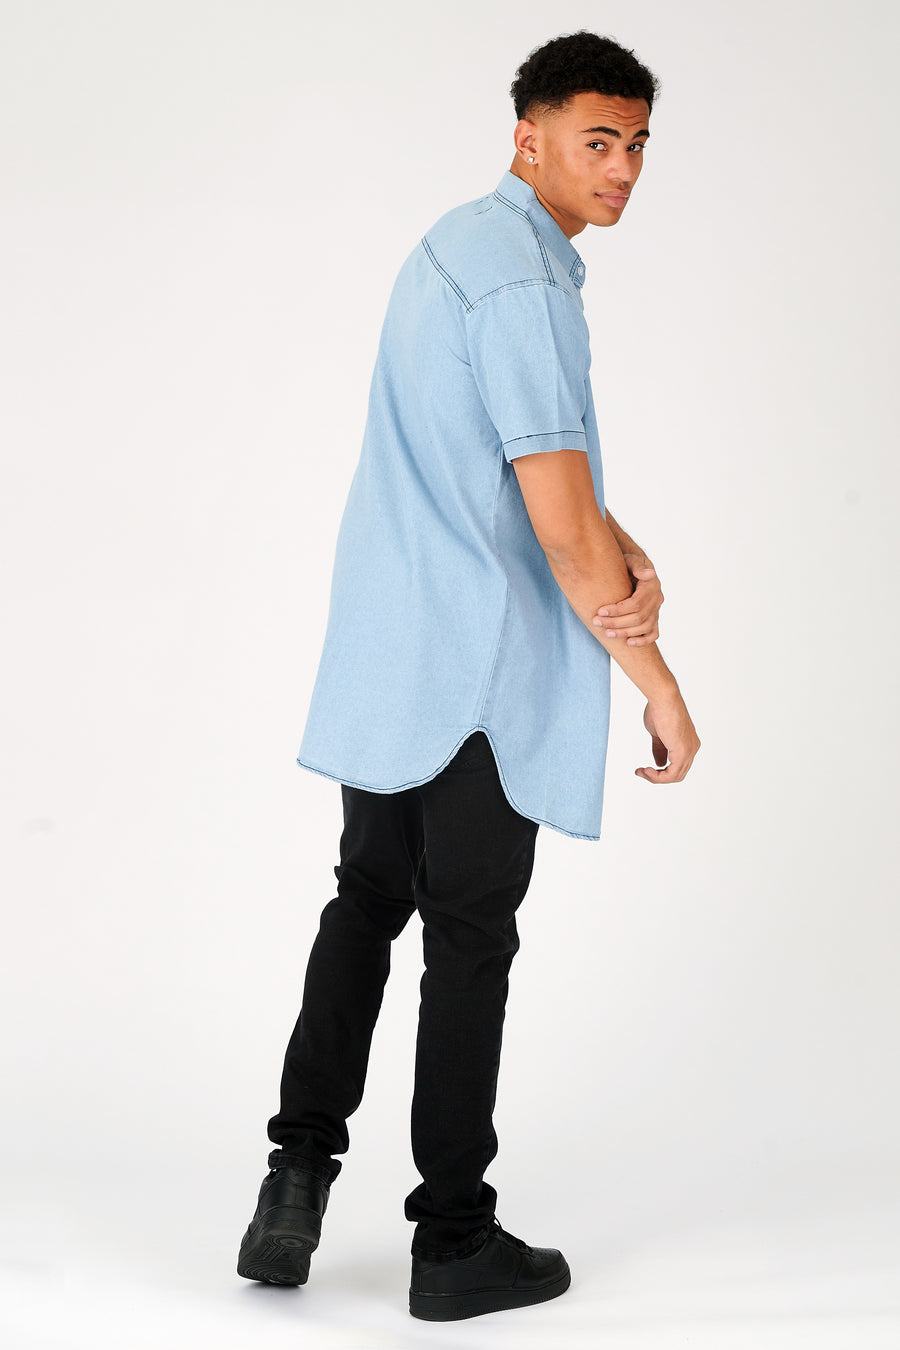 Body side shot of a standing male model wearing a JMOJO Light Blue Wash Slim Fit Longline Short Sleeve Denim Shirt